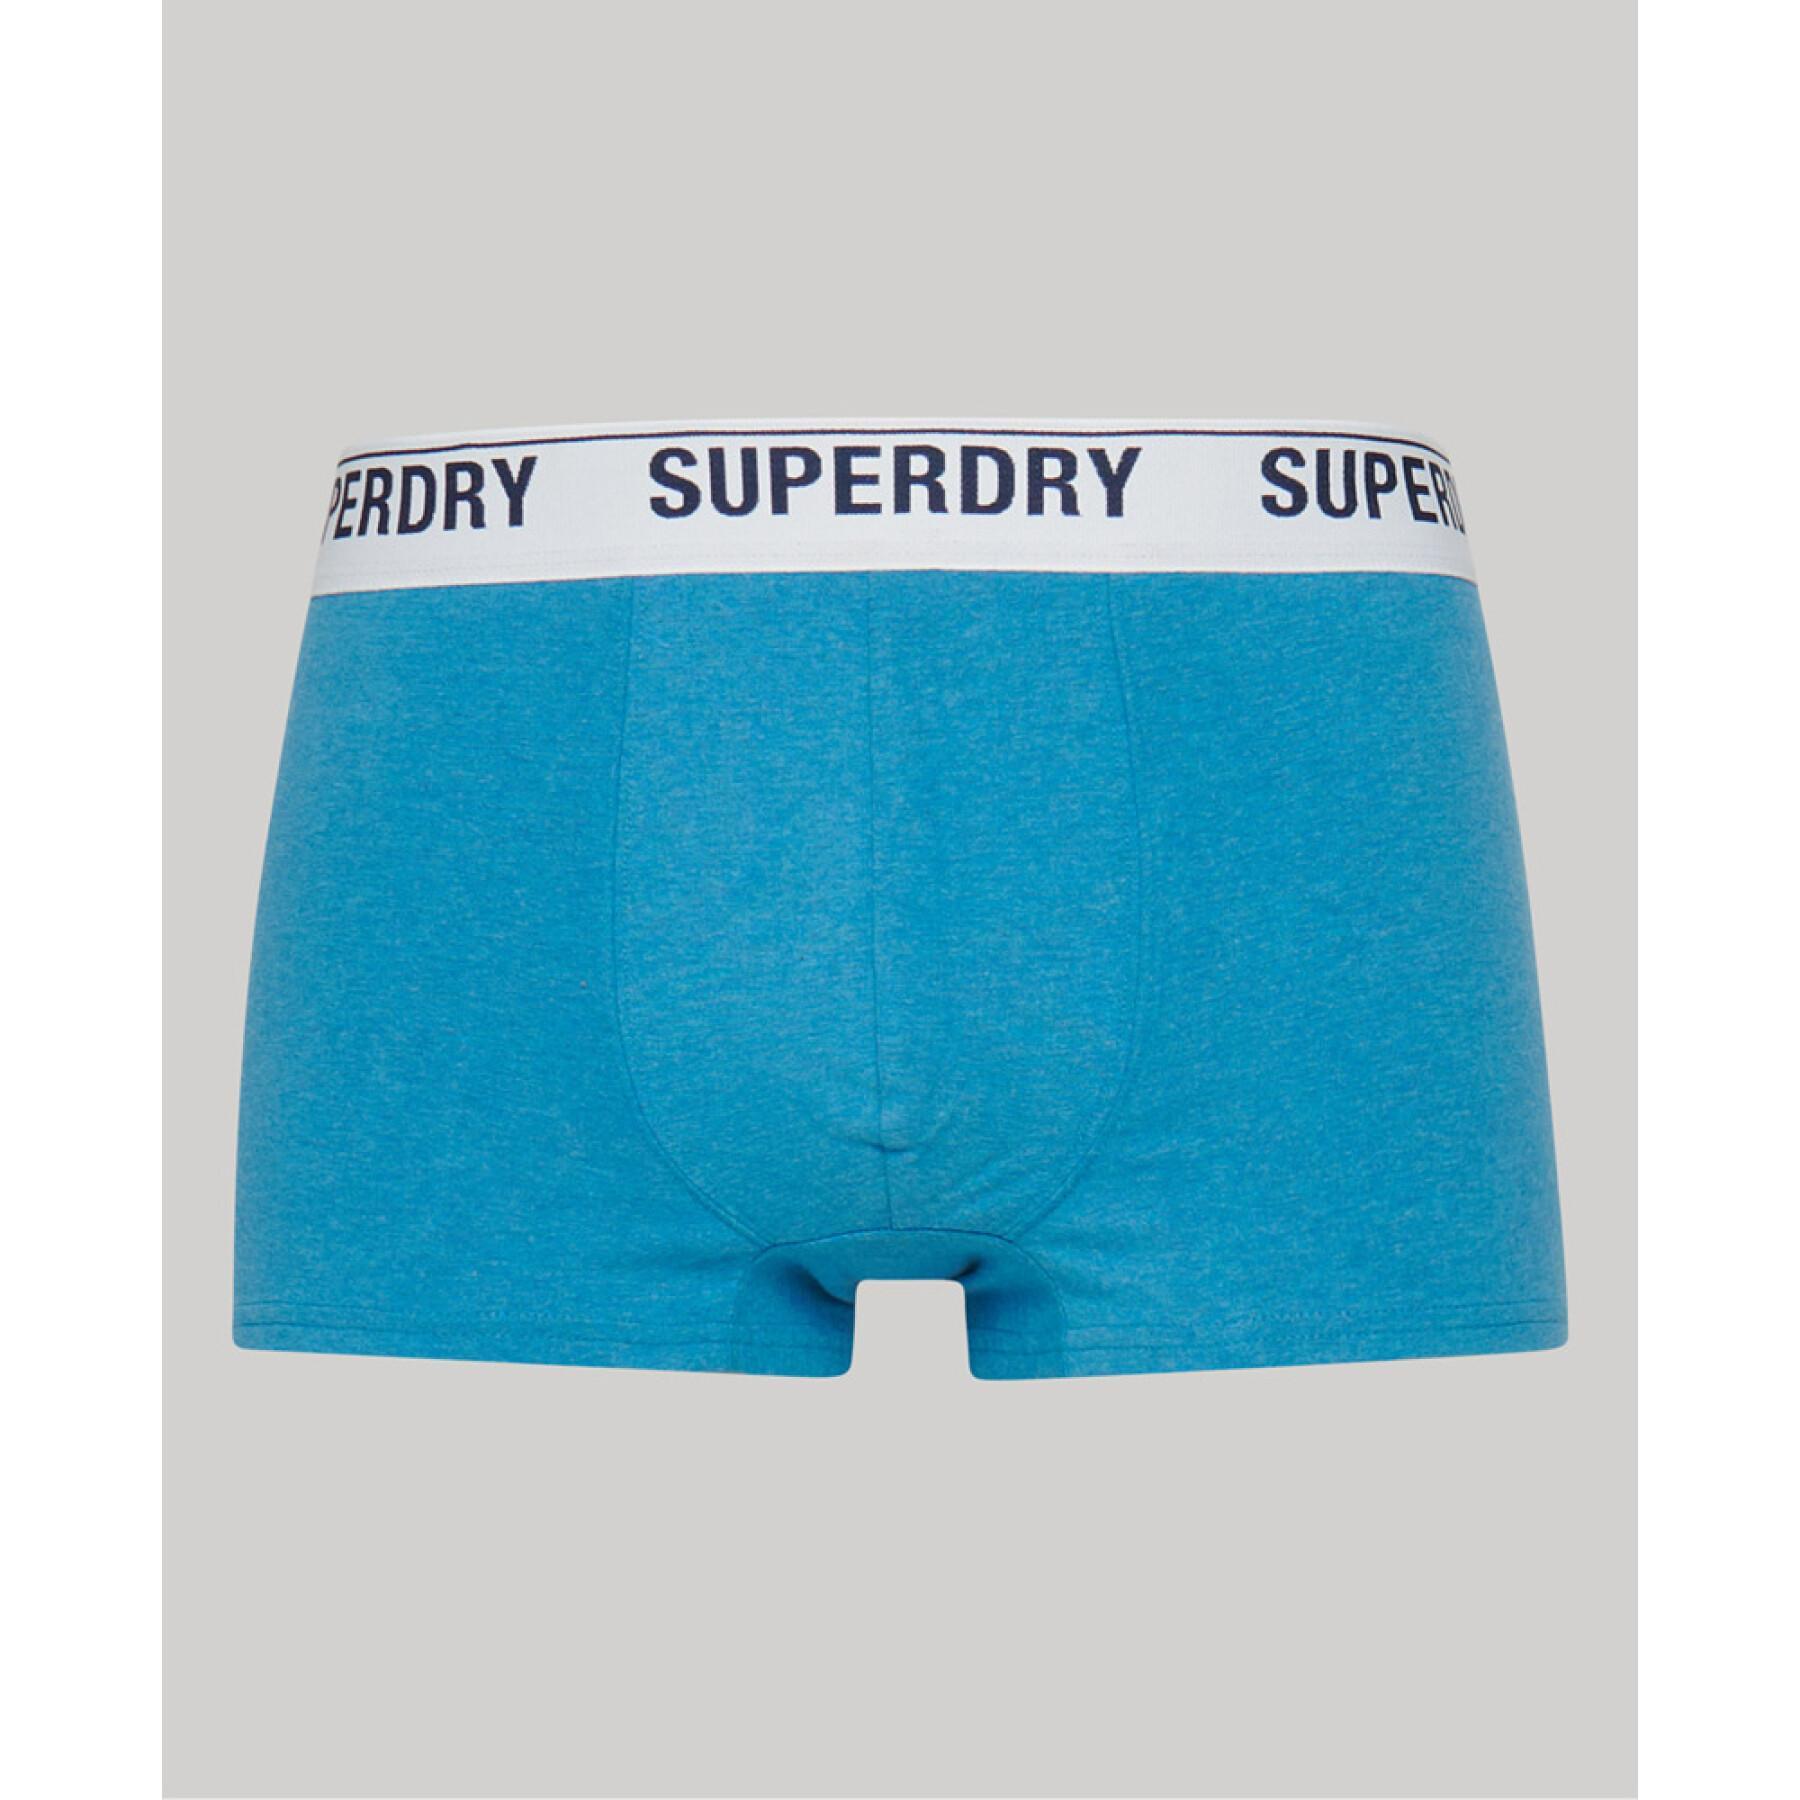 Organic cotton boxer shorts Superdry (x2)